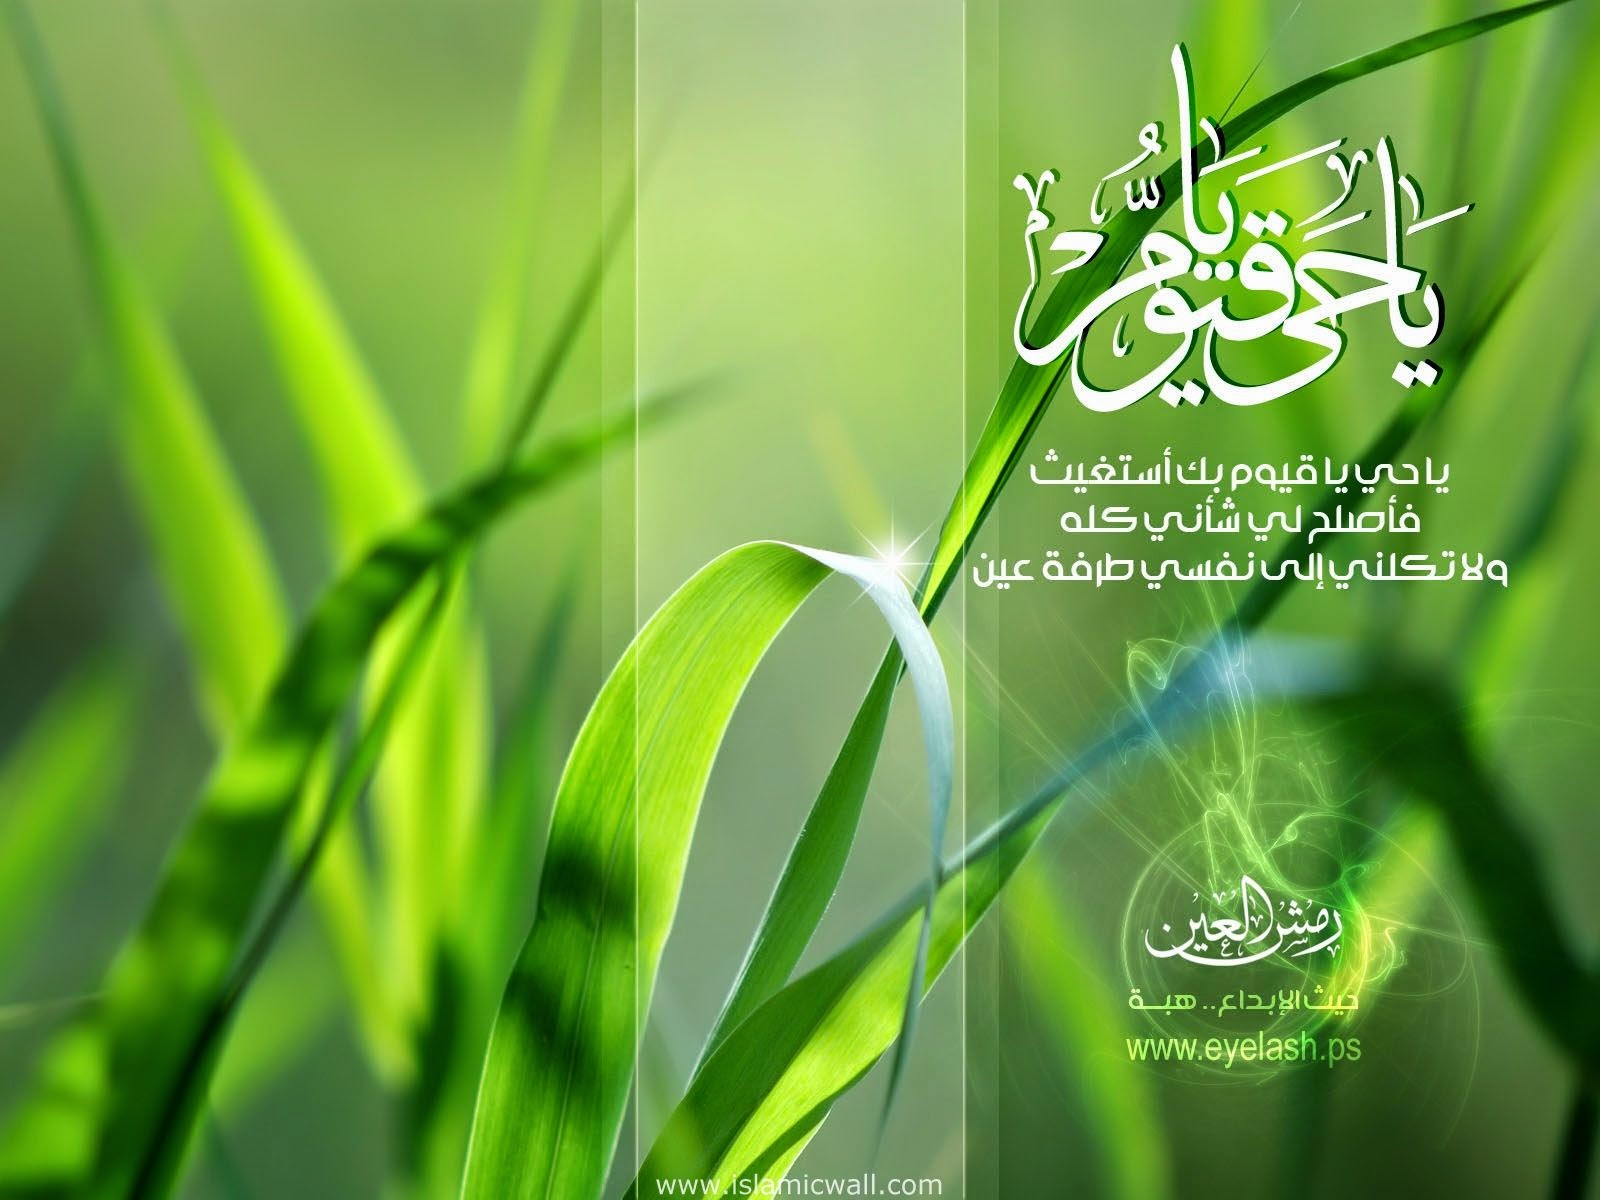 Album Mp3 Sholawat Al Hasbiyah Group Download Free 